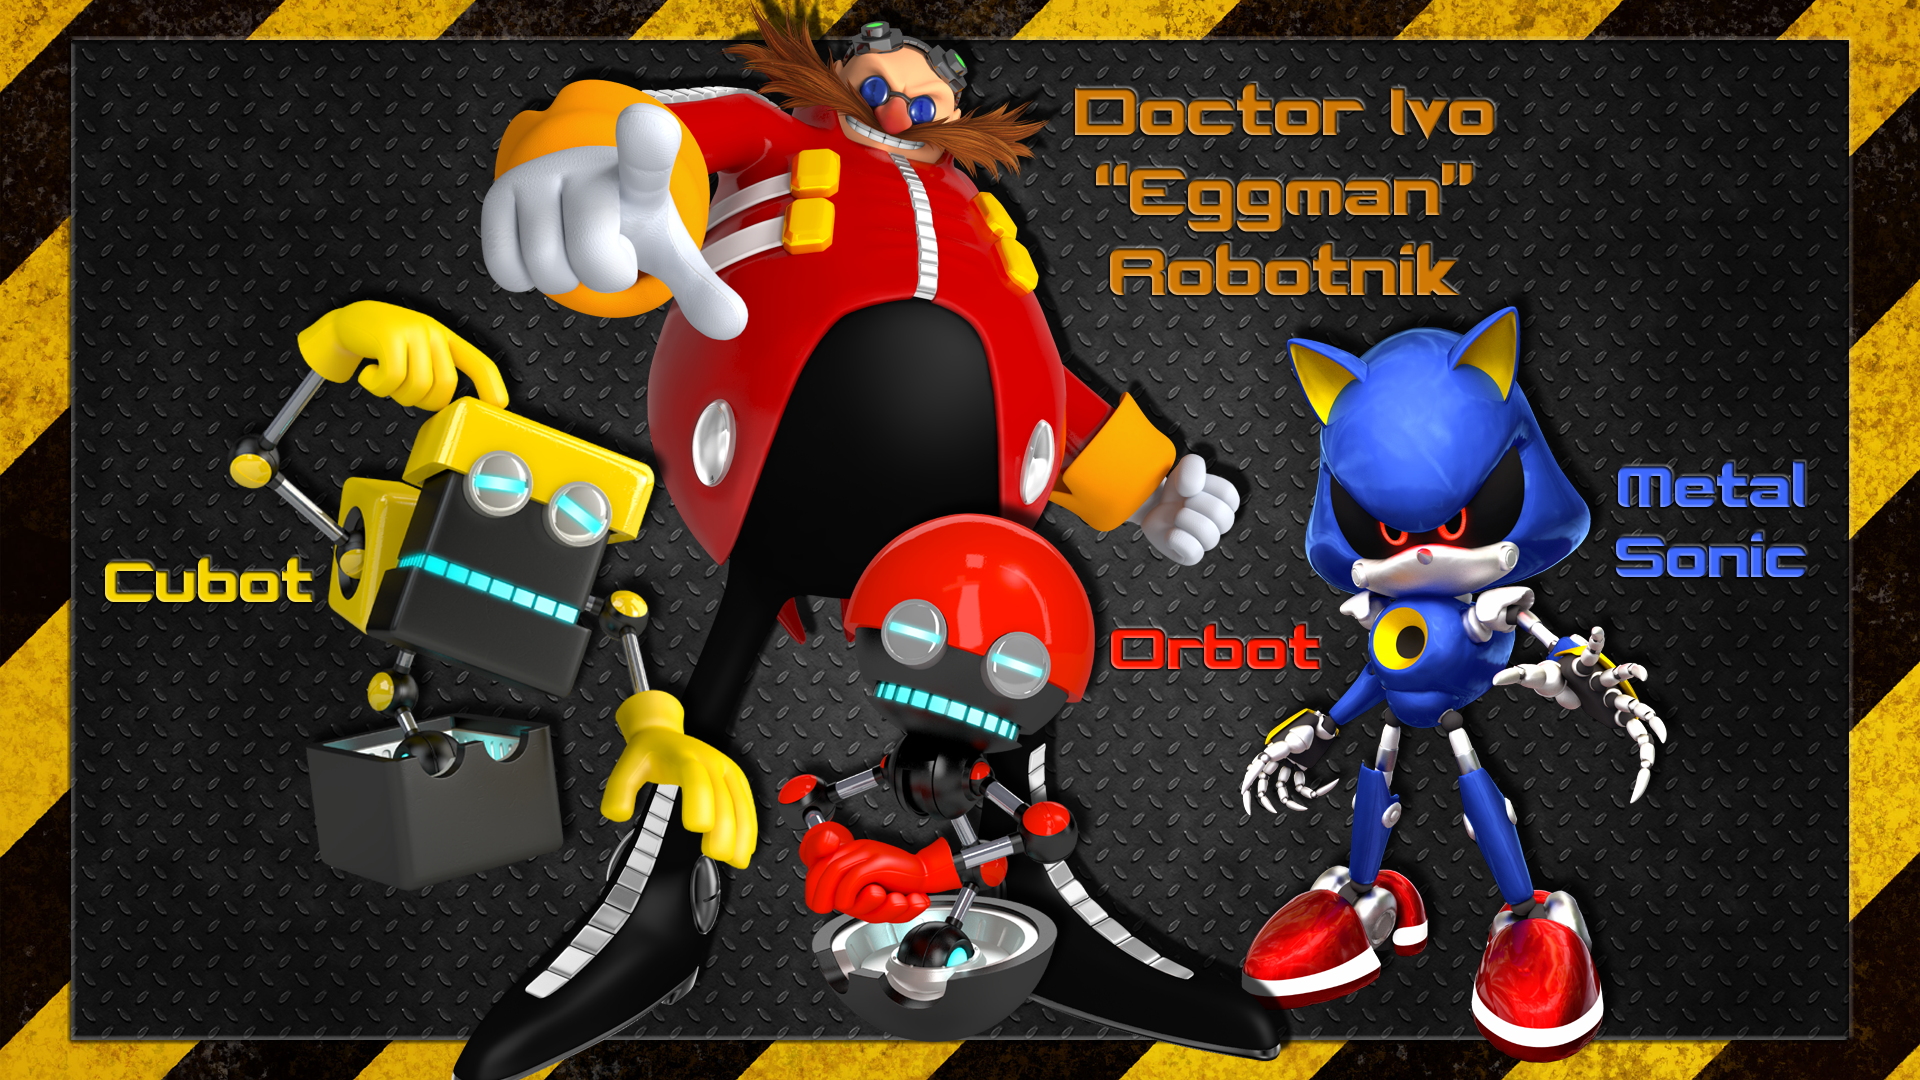 Team Eggman. Sonic the Hedgehog